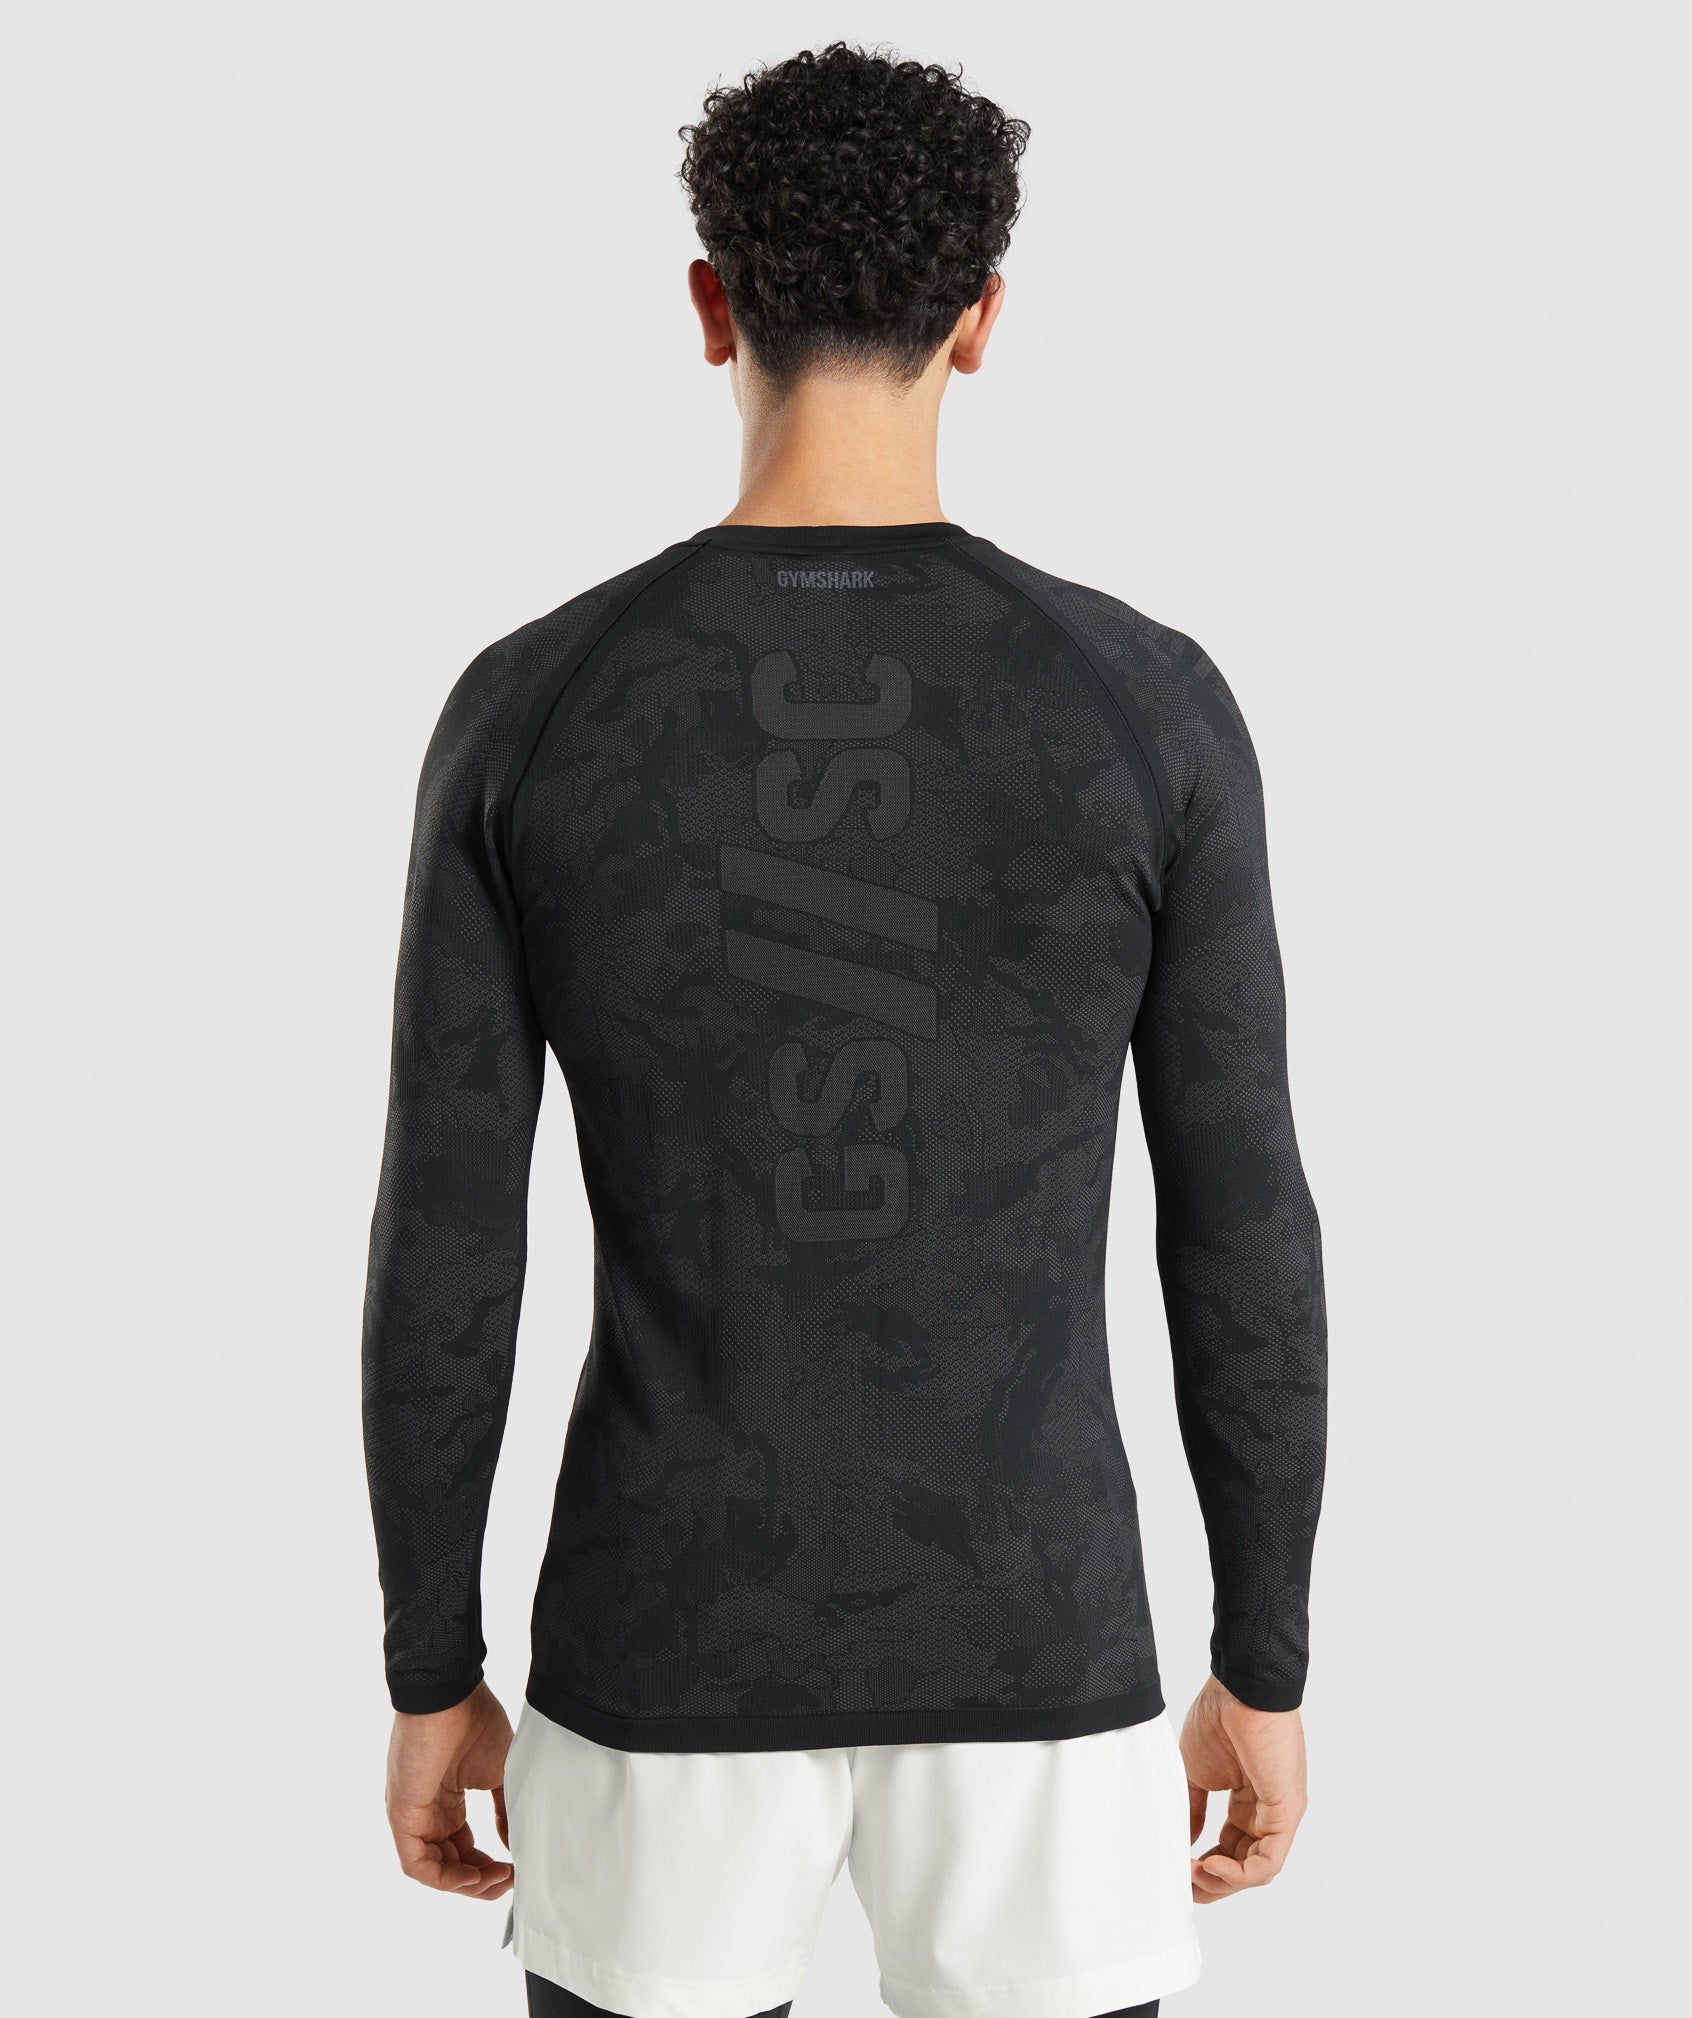 Gymshark//Steve Cook Long Sleeve Seamless T-Shirt in Black/Graphite Grey - view 3